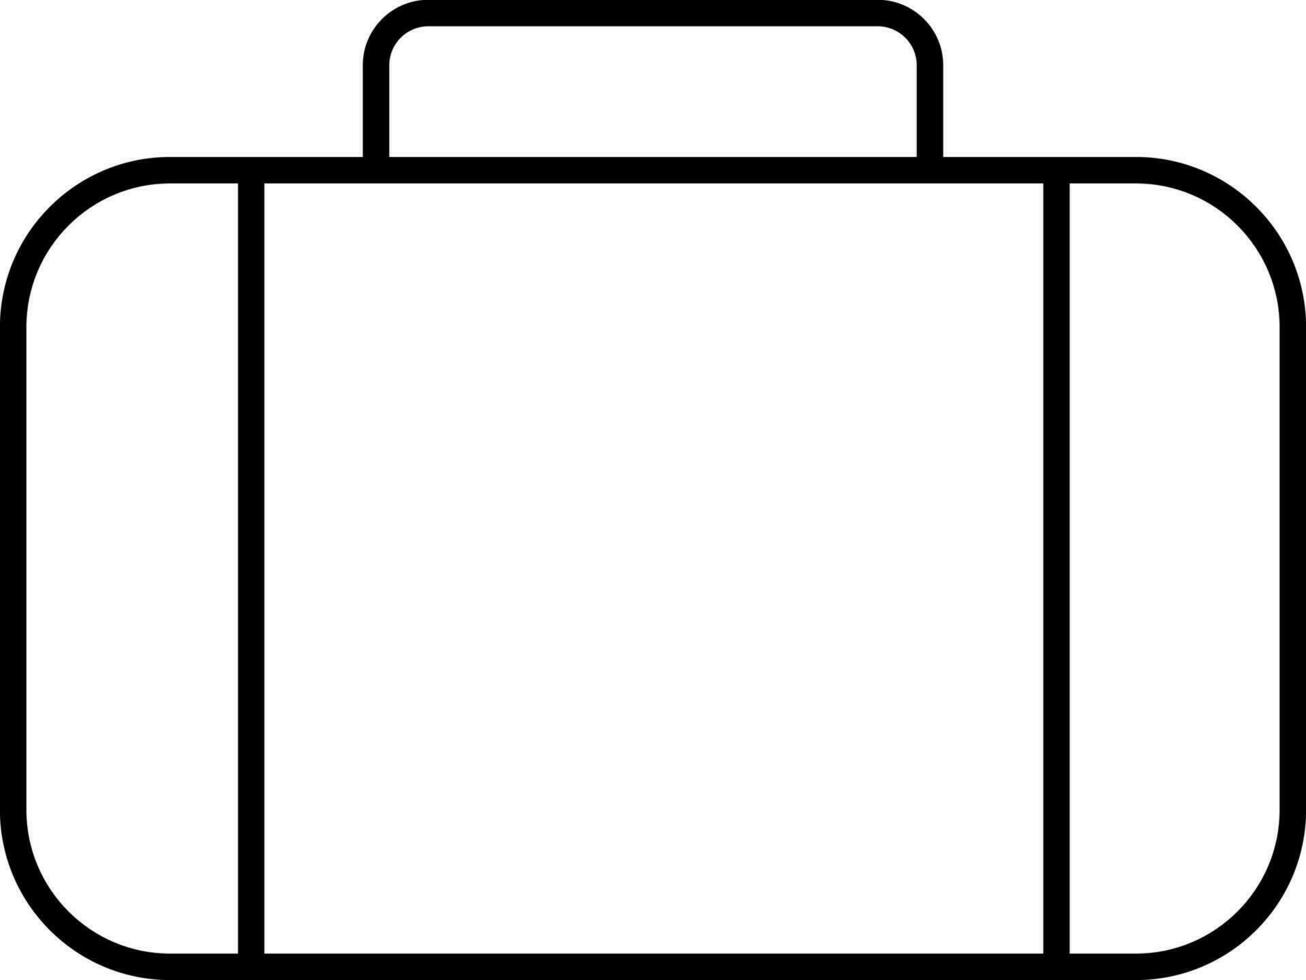 Black Thin Line Art Of Briefcase Icon. vector